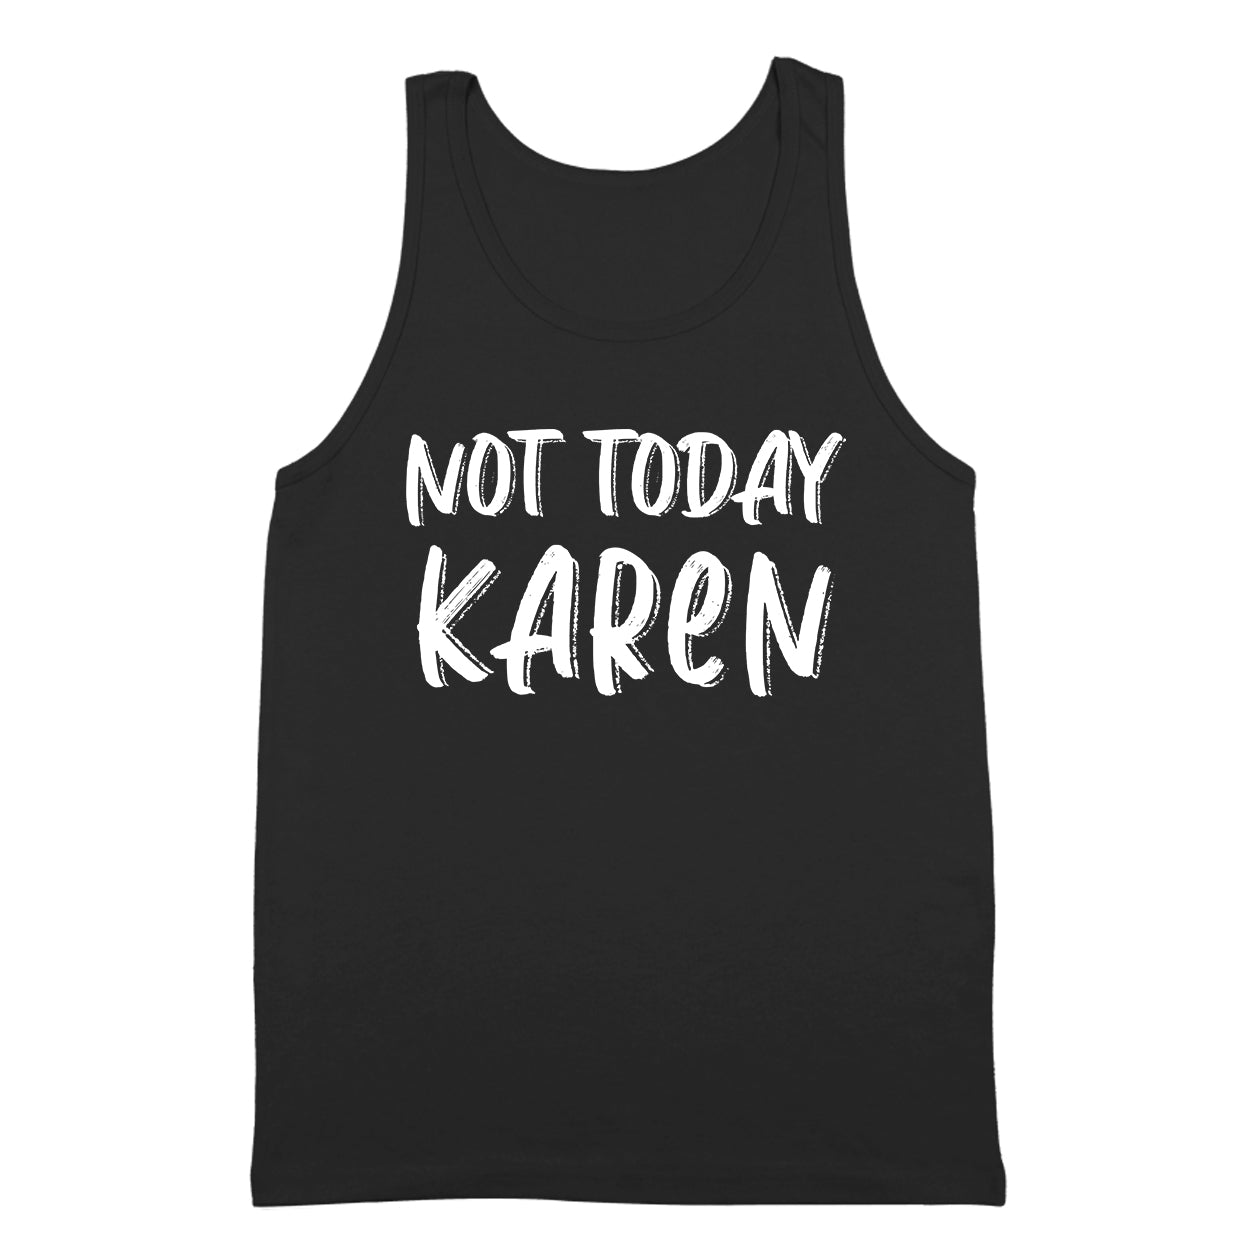 Not Today Karen Tshirt - Donkey Tees